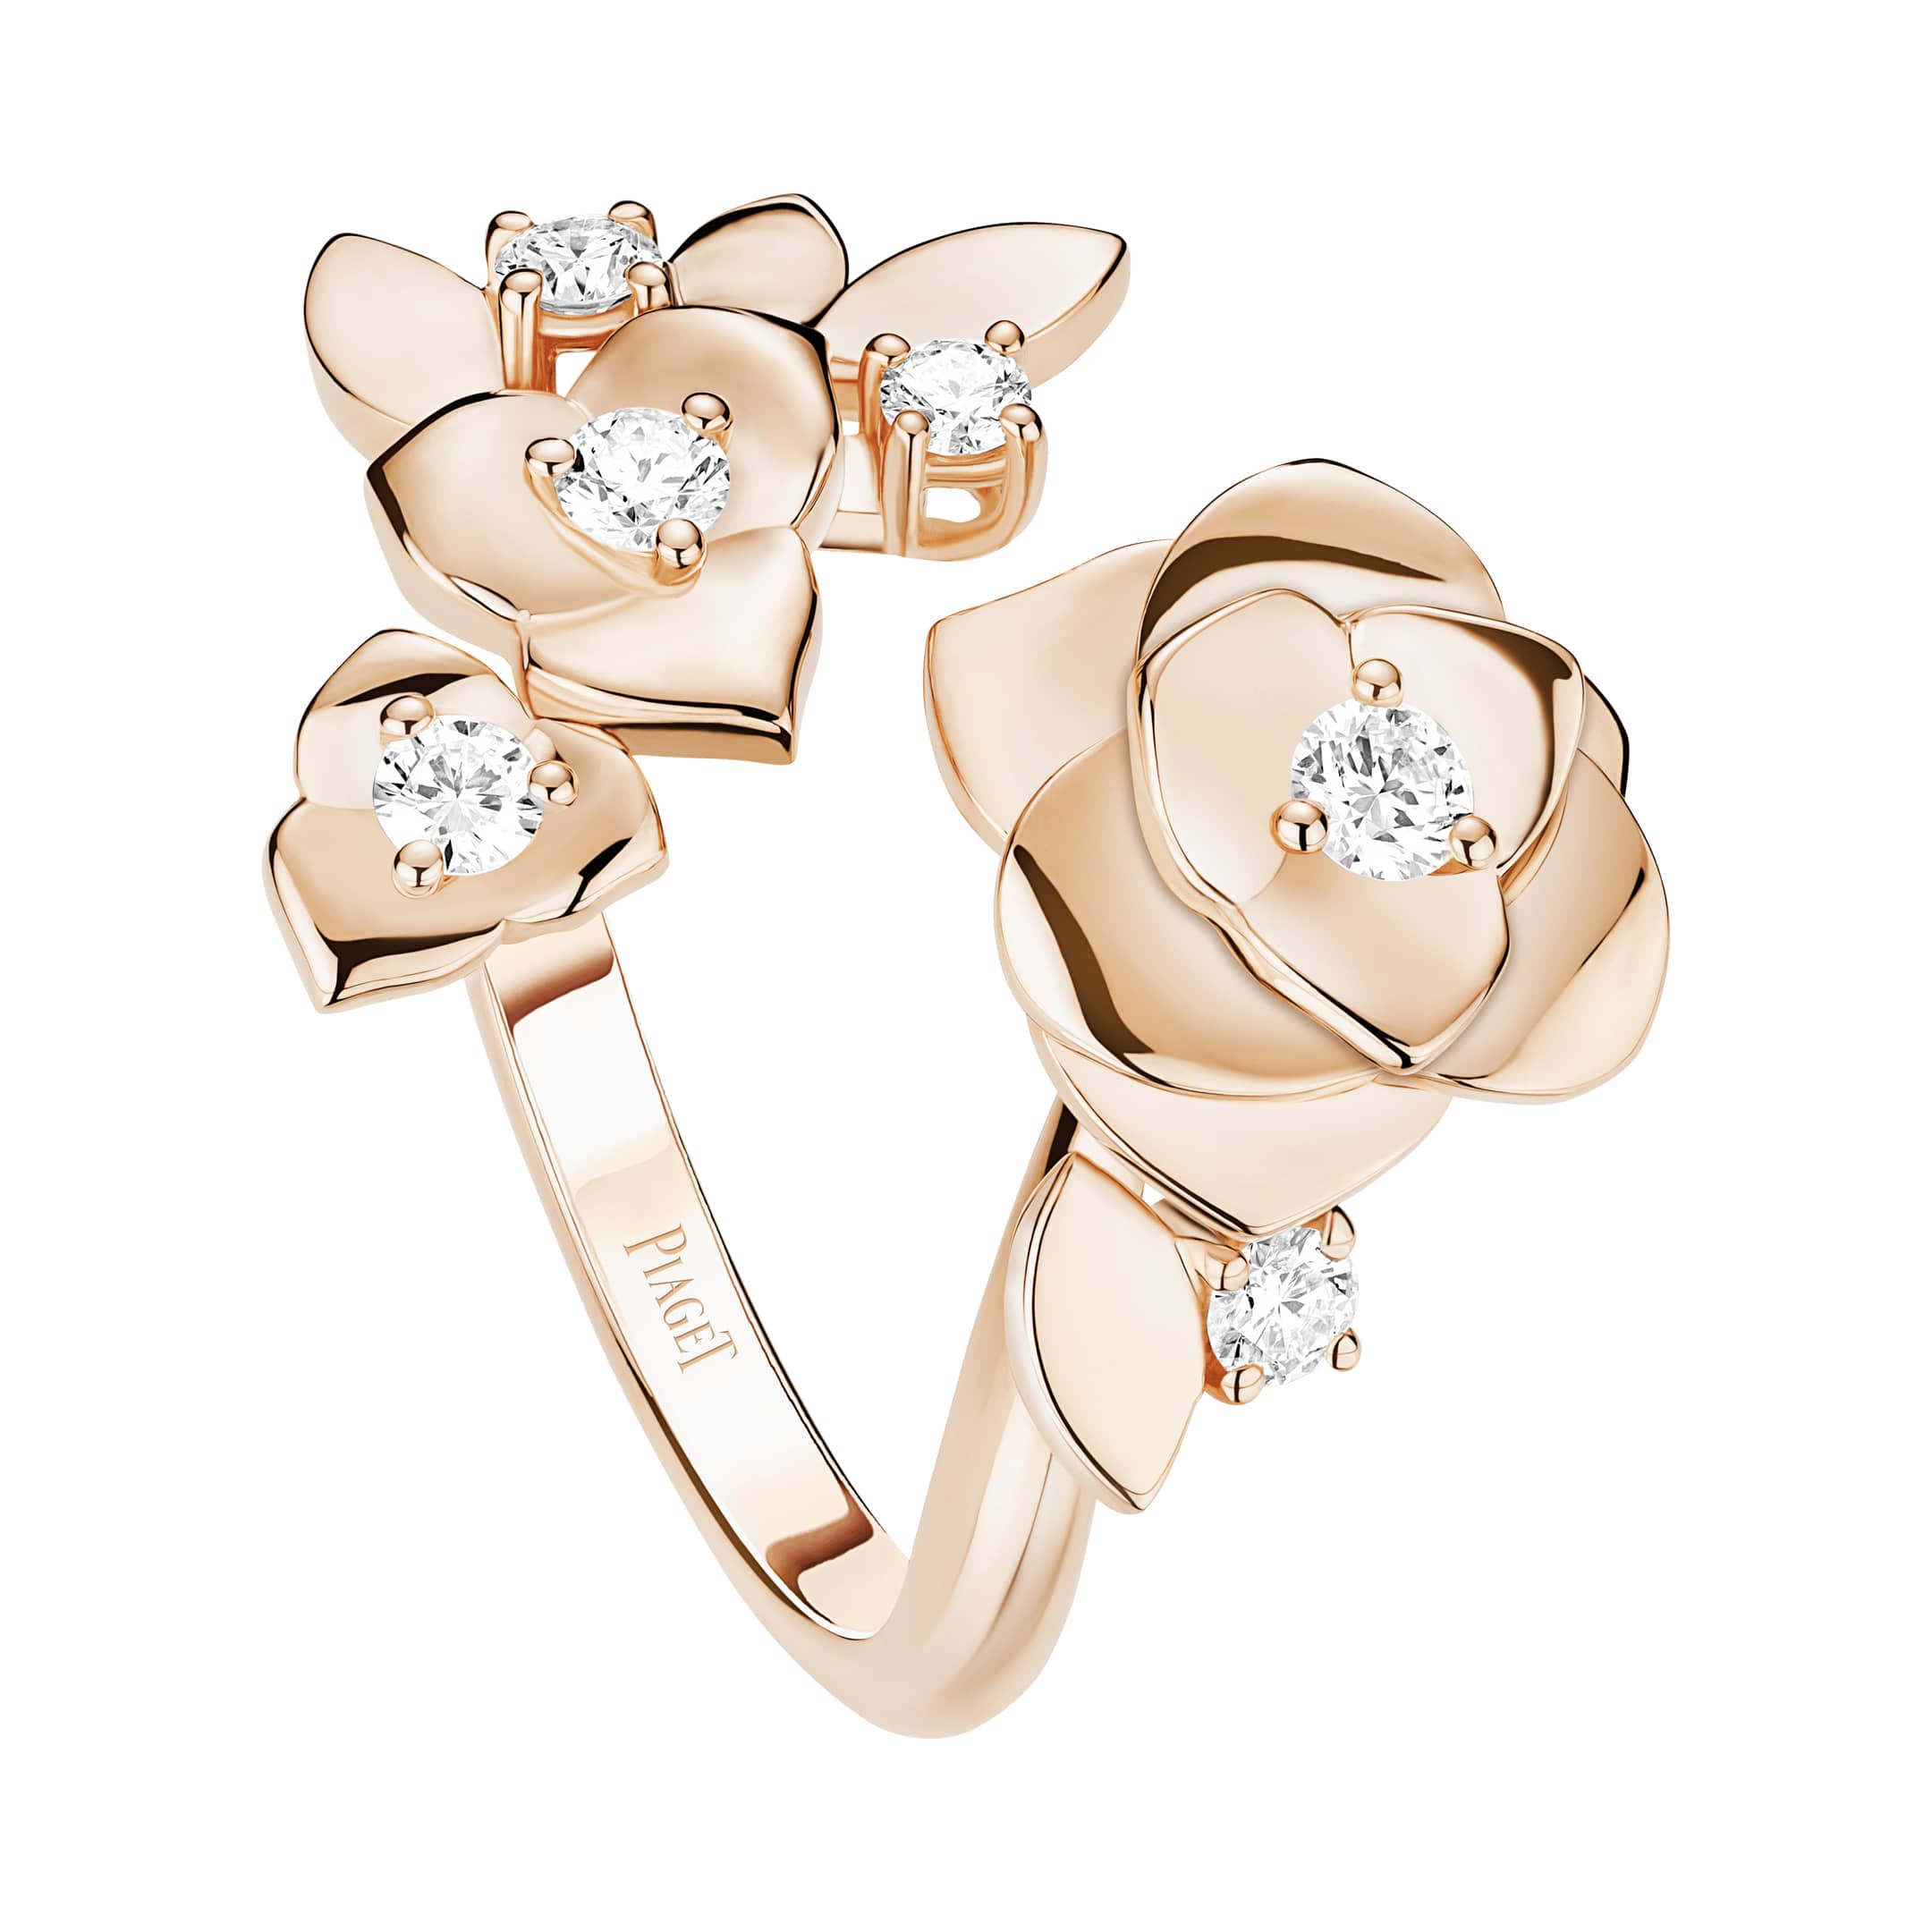 Rose gold Diamond Ring G34UR400 - Piaget Luxury Jewelry Online